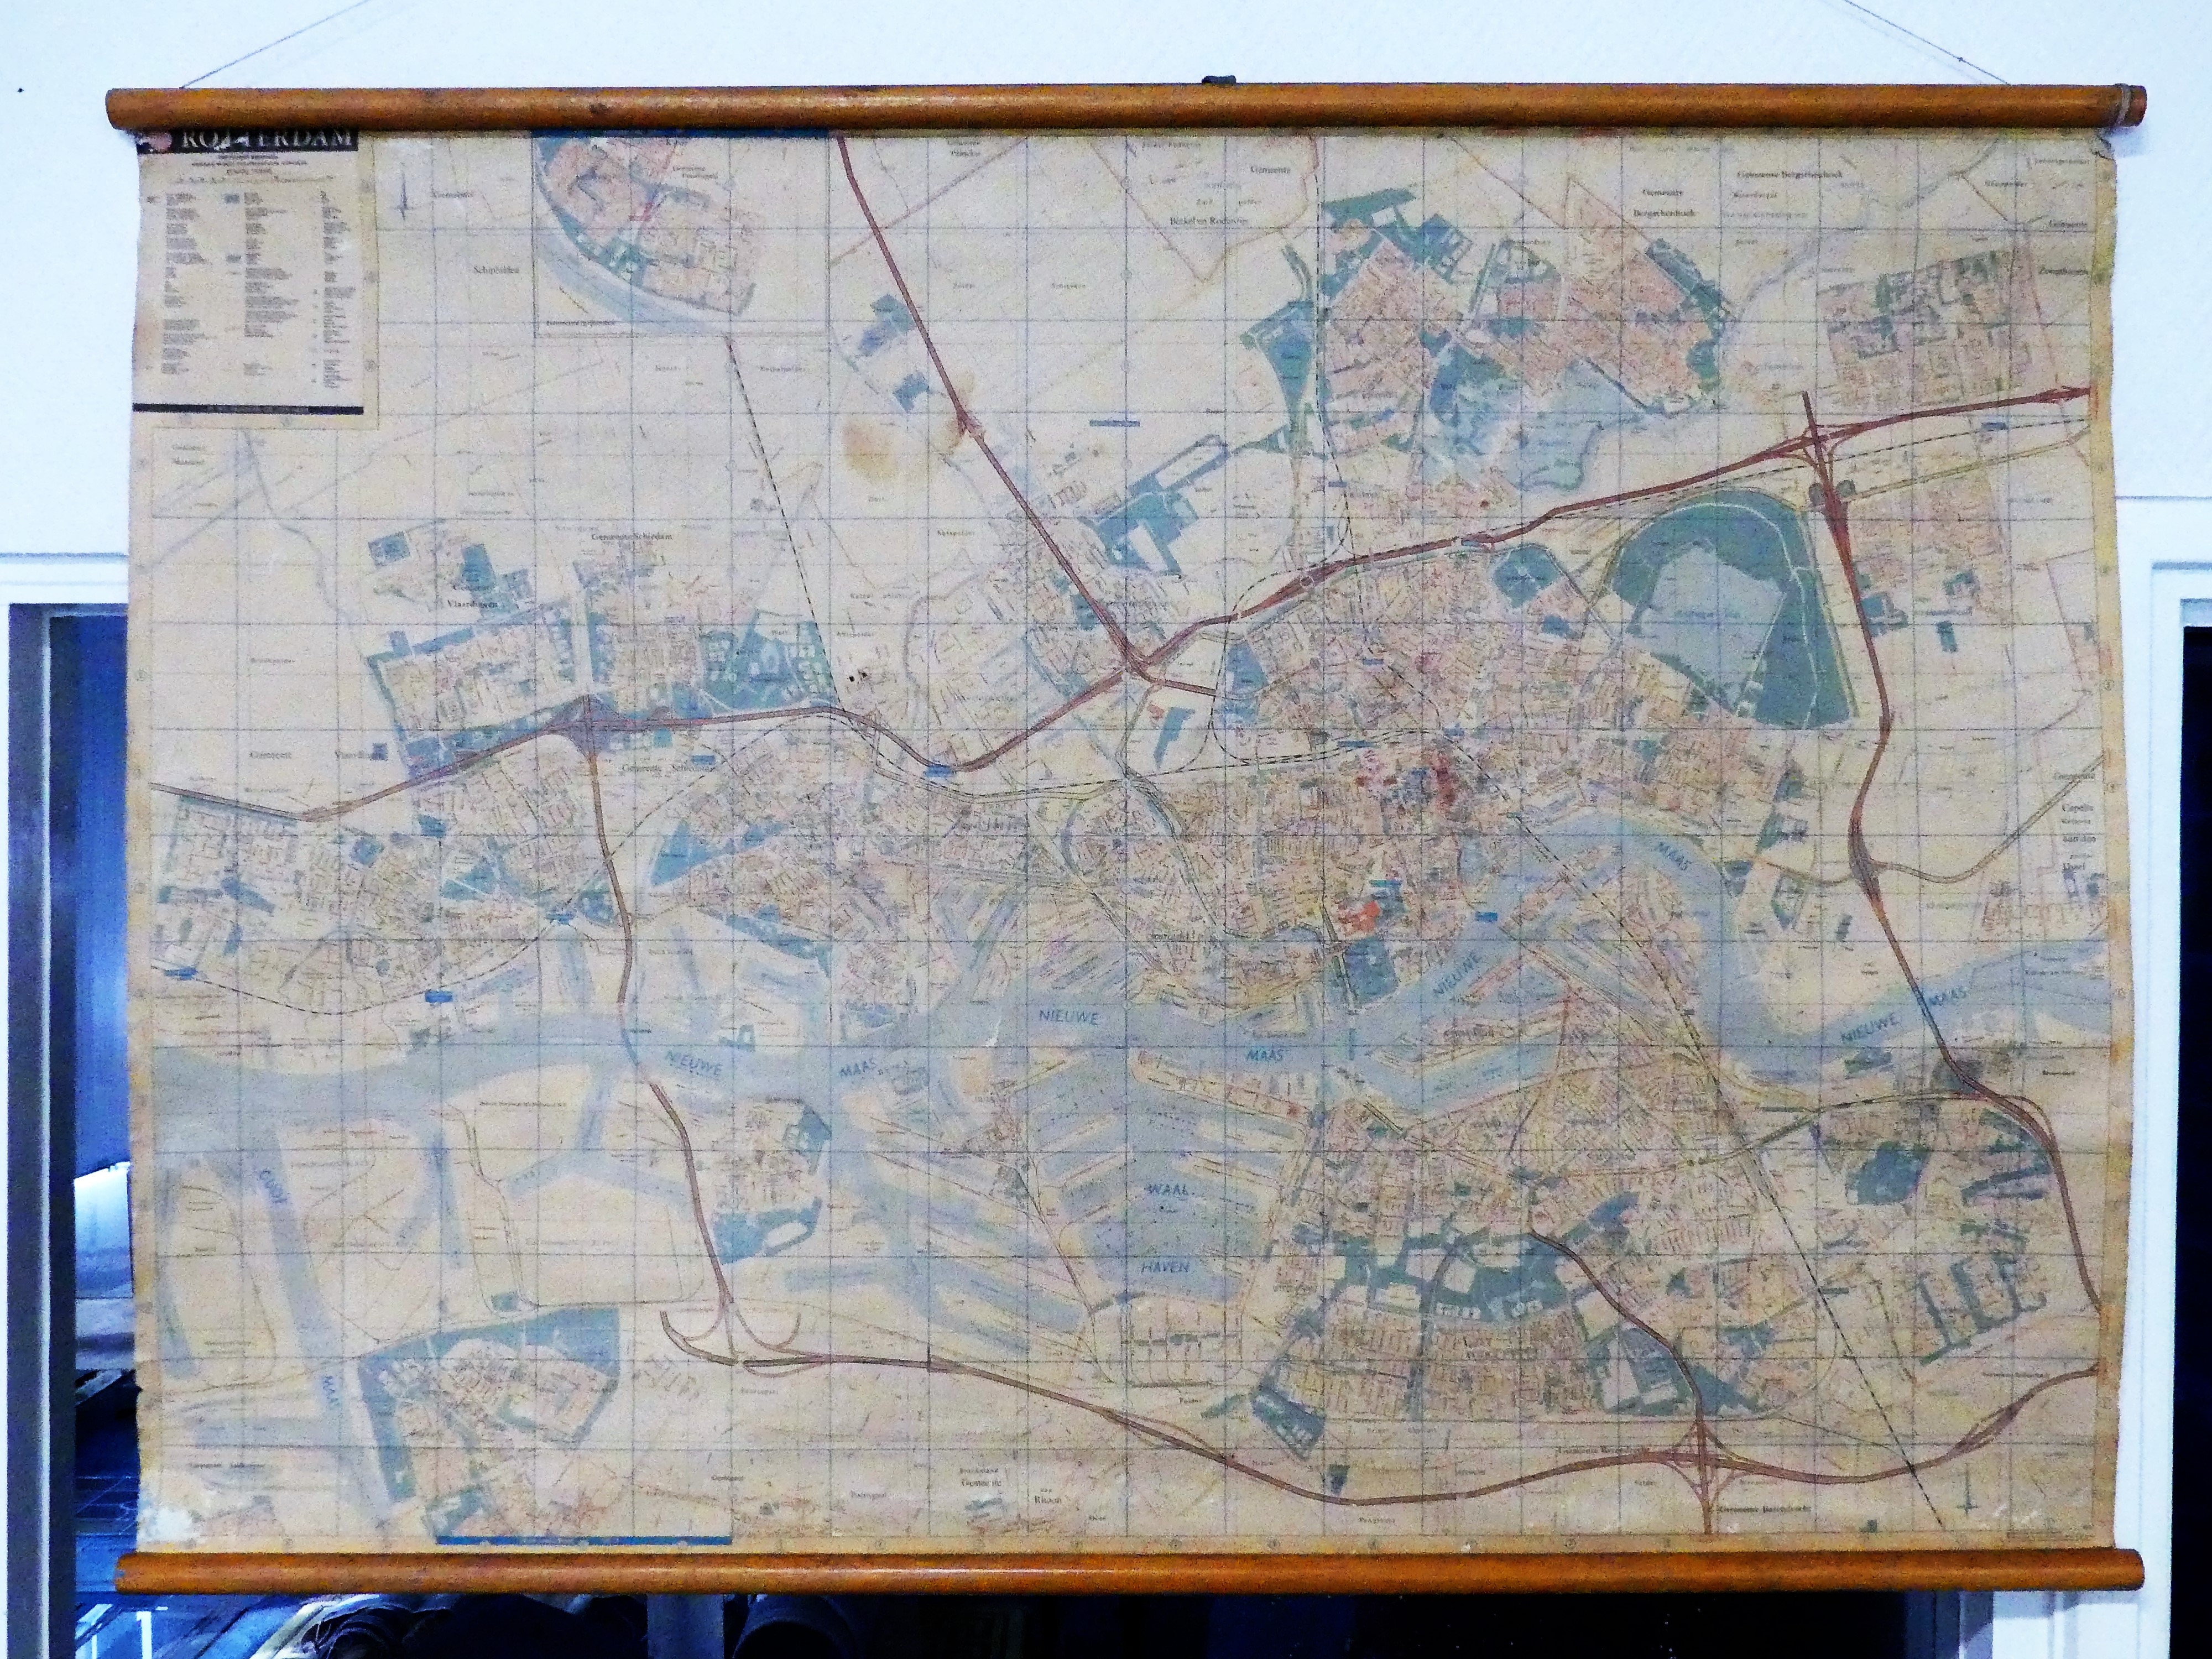 Falk kaart van Rotterdam circa 1960